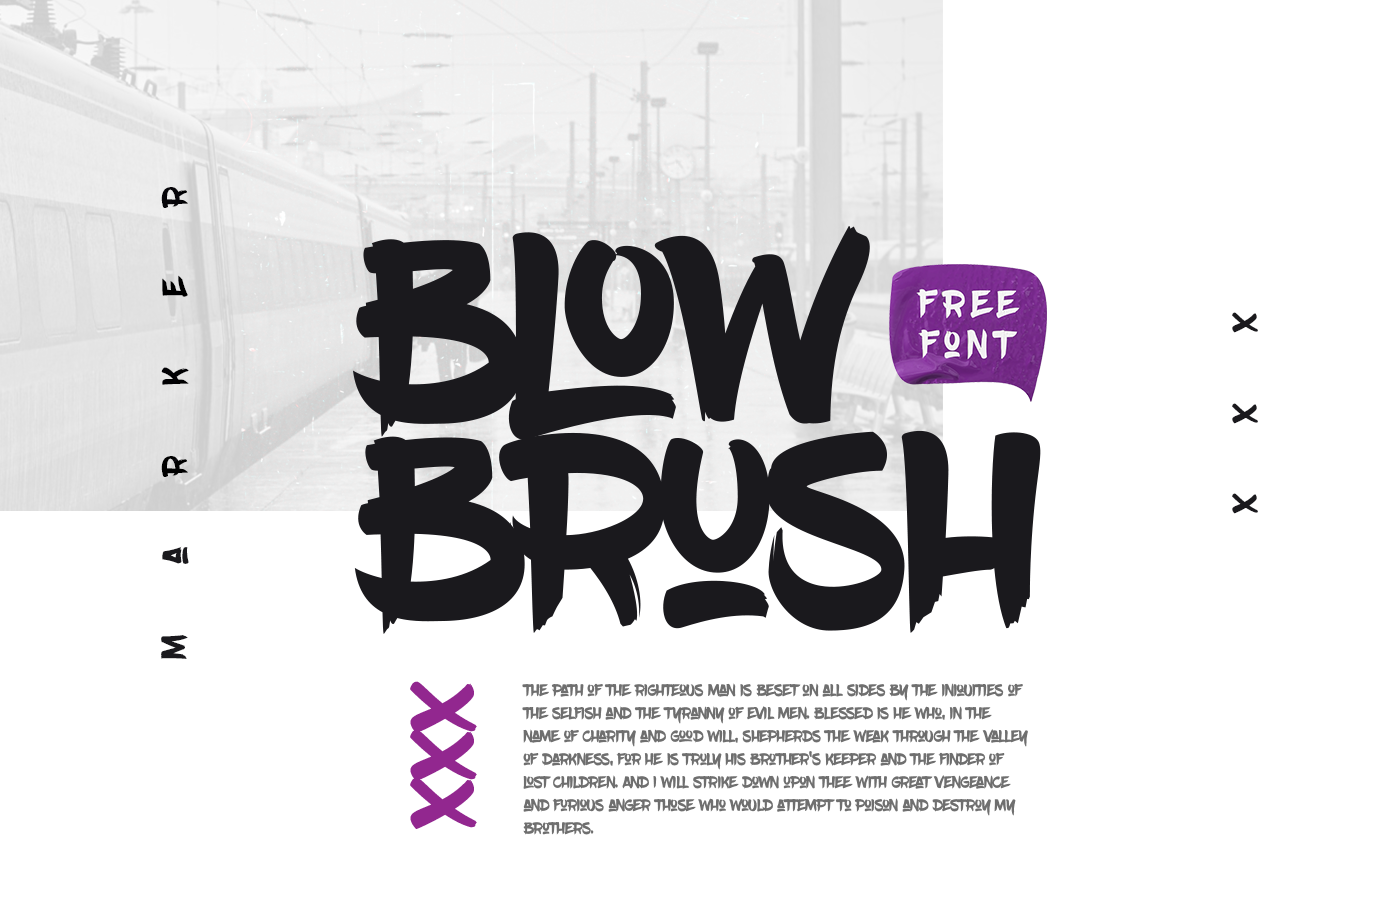 BlowBrush free font on Behance